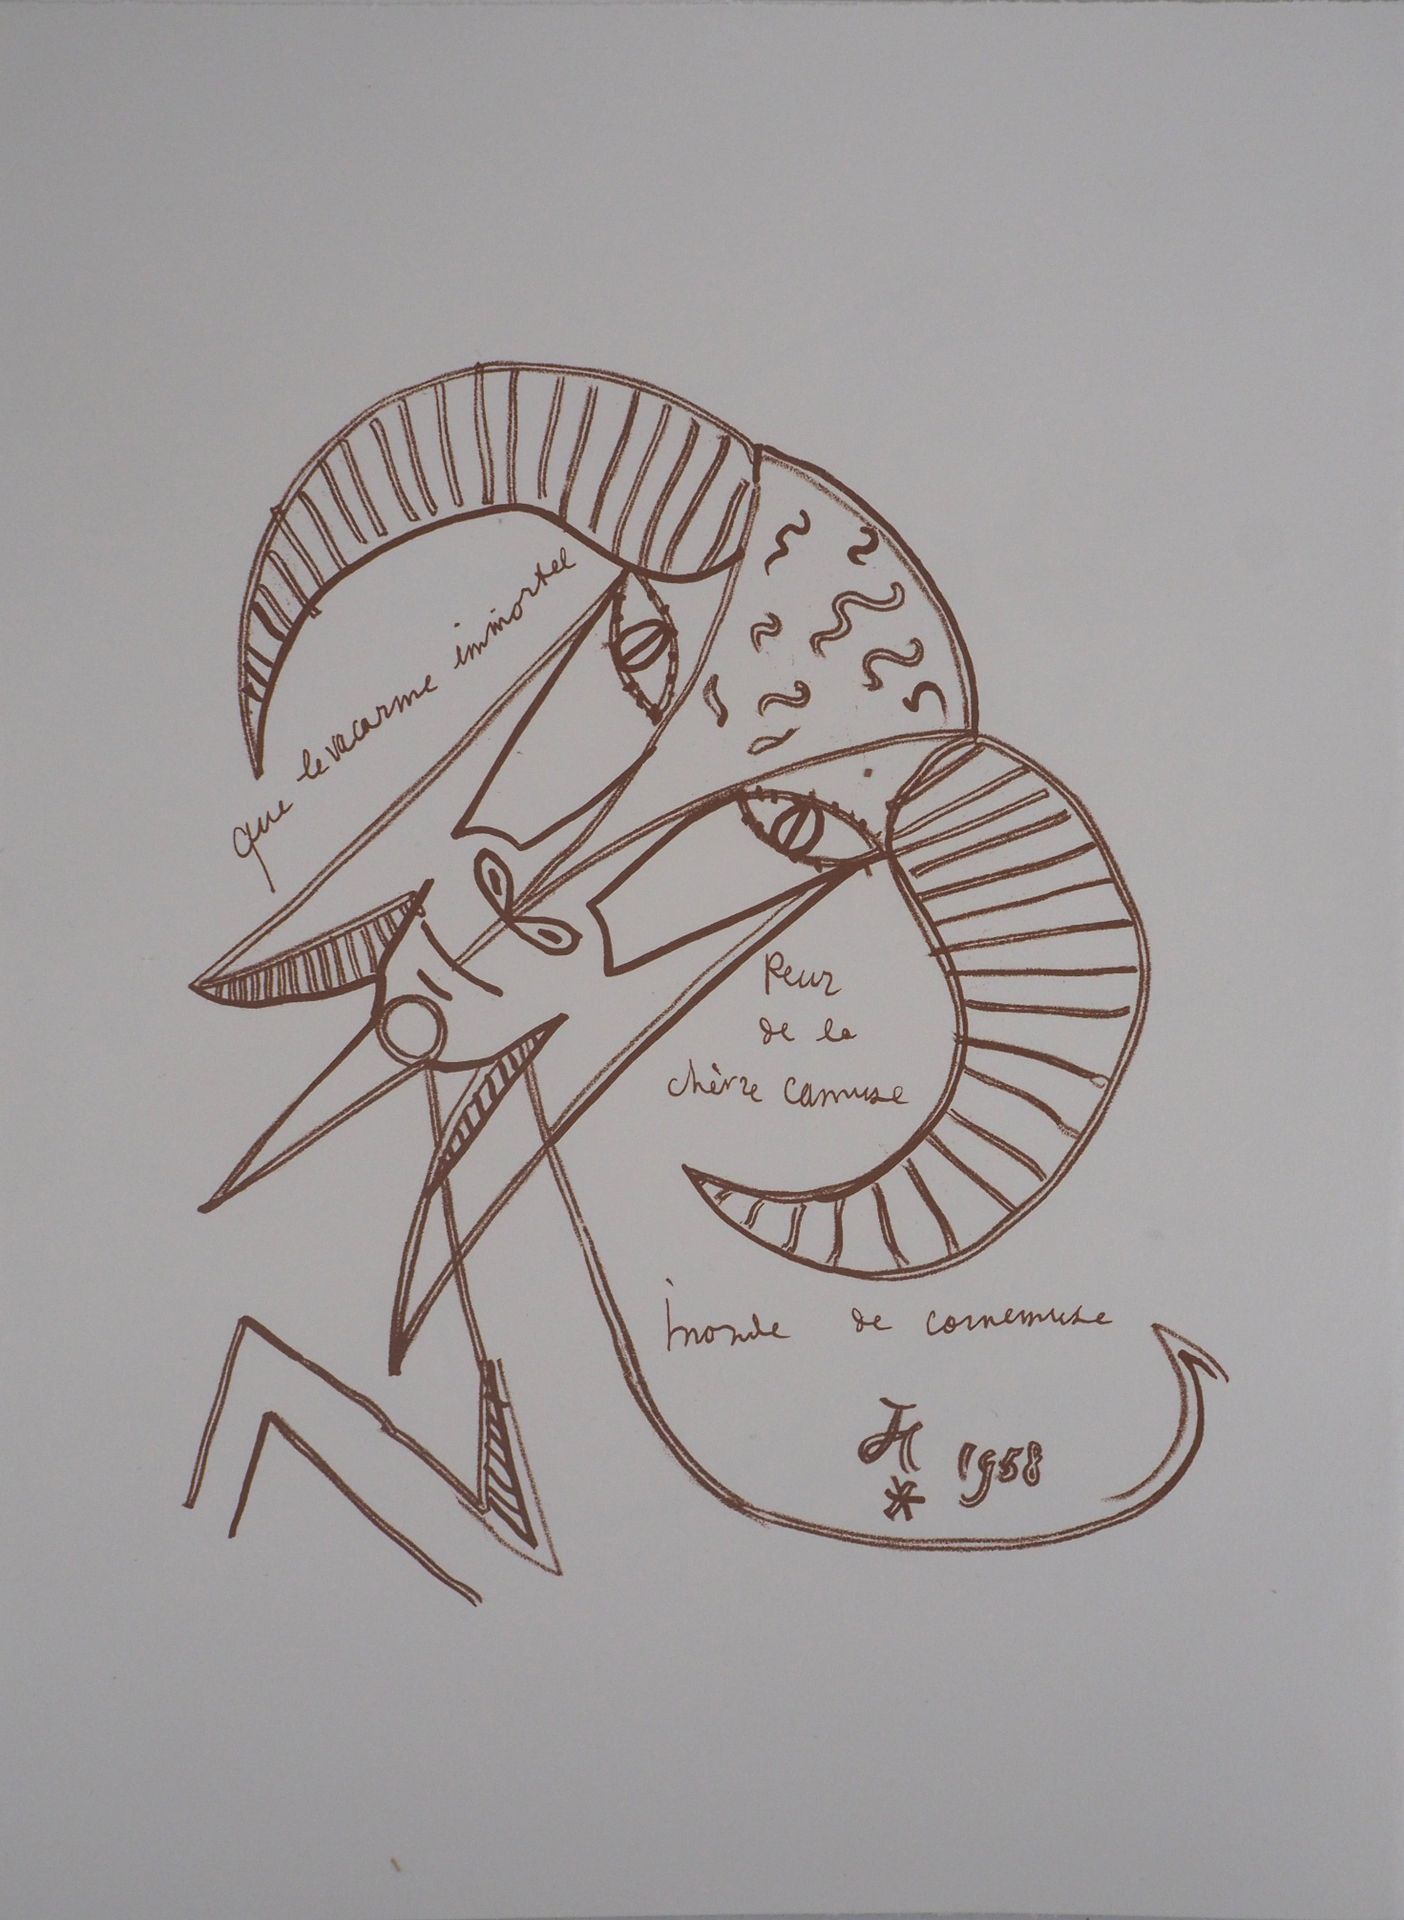 JEAN COCTEAU Jean Cocteau

The goat

Original lithograph

Signed with the monogr&hellip;